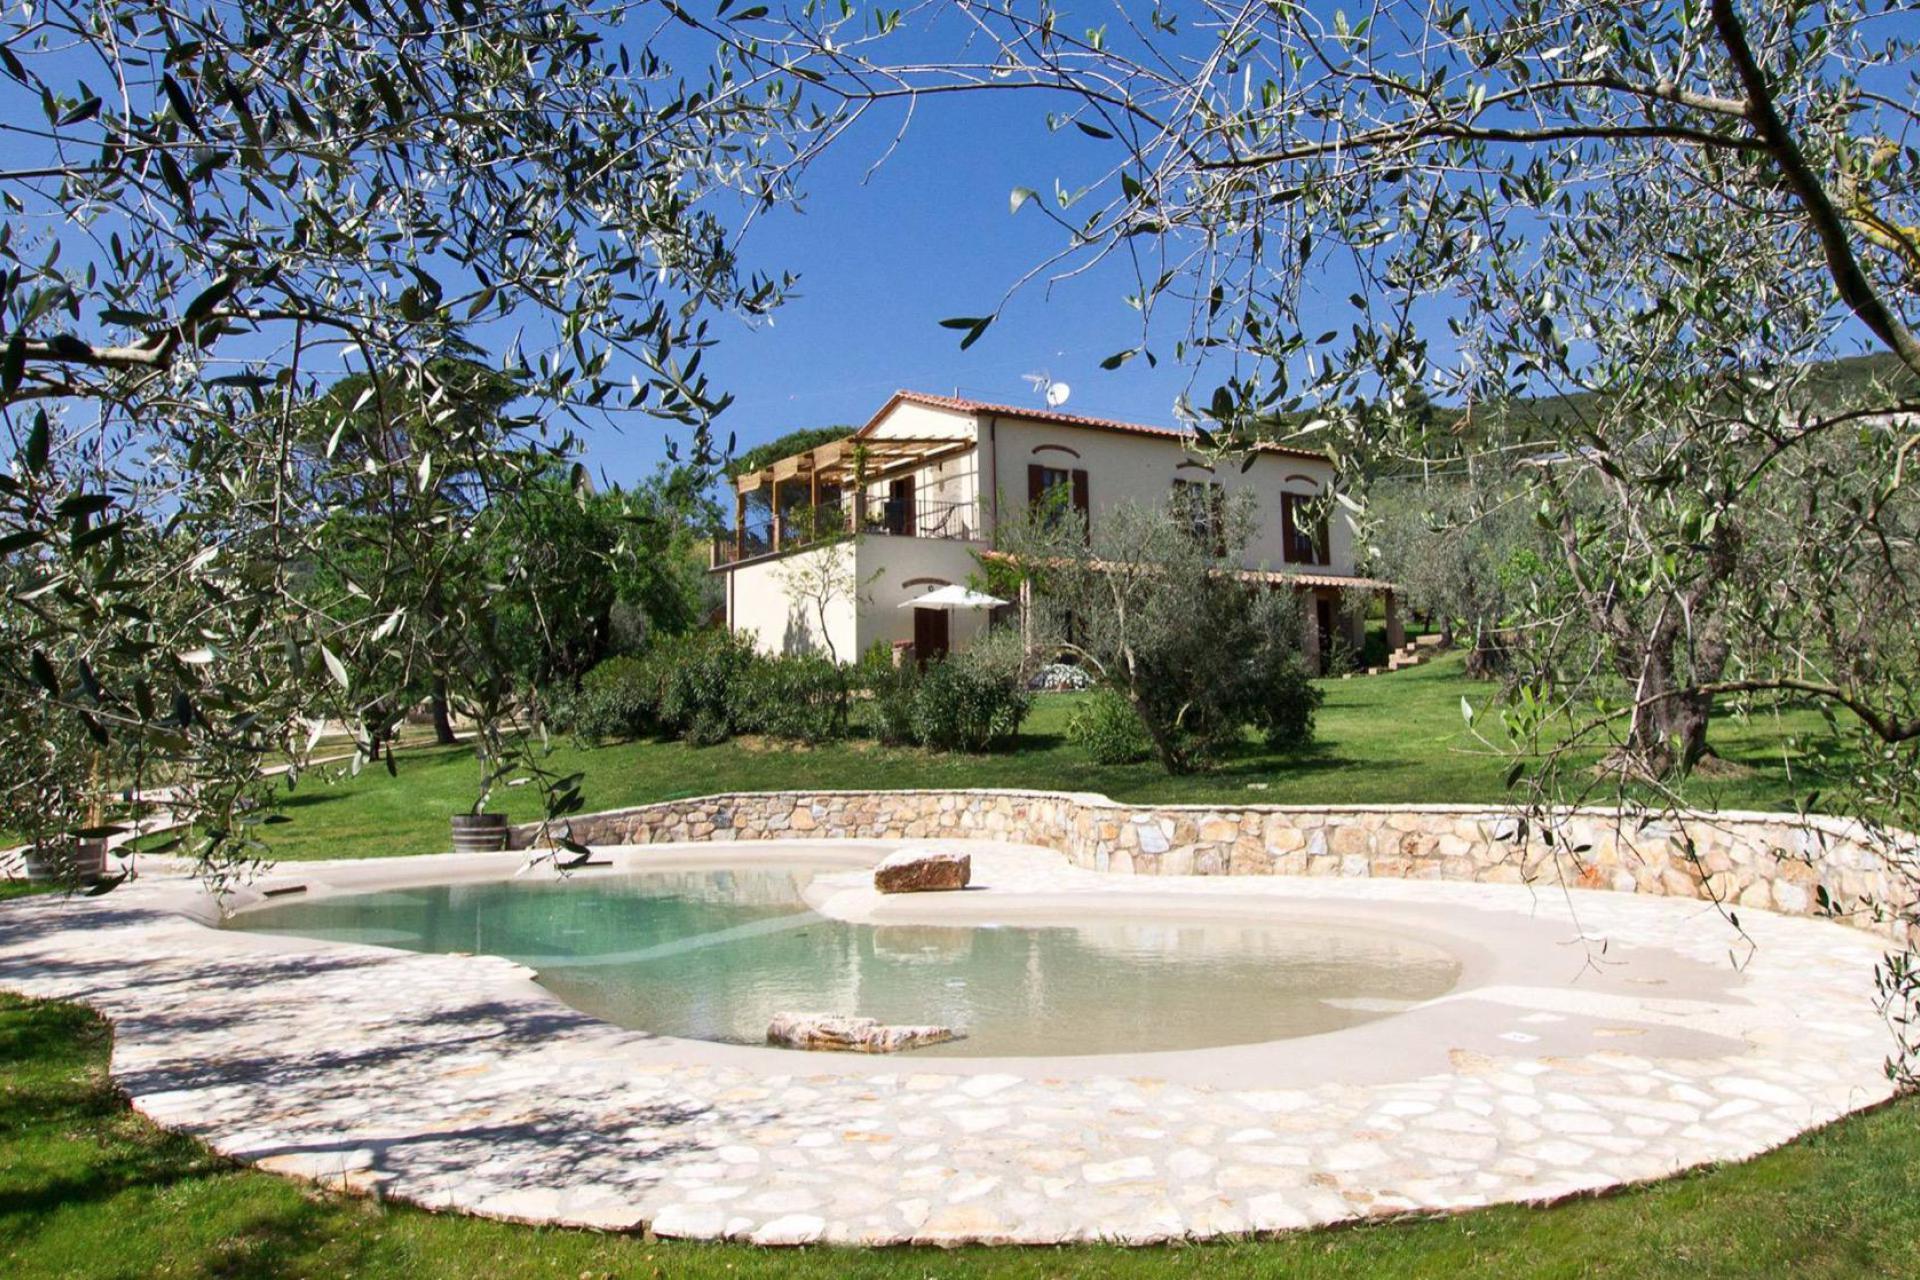 Agriturismo Tuscany, in olive grove near the sea